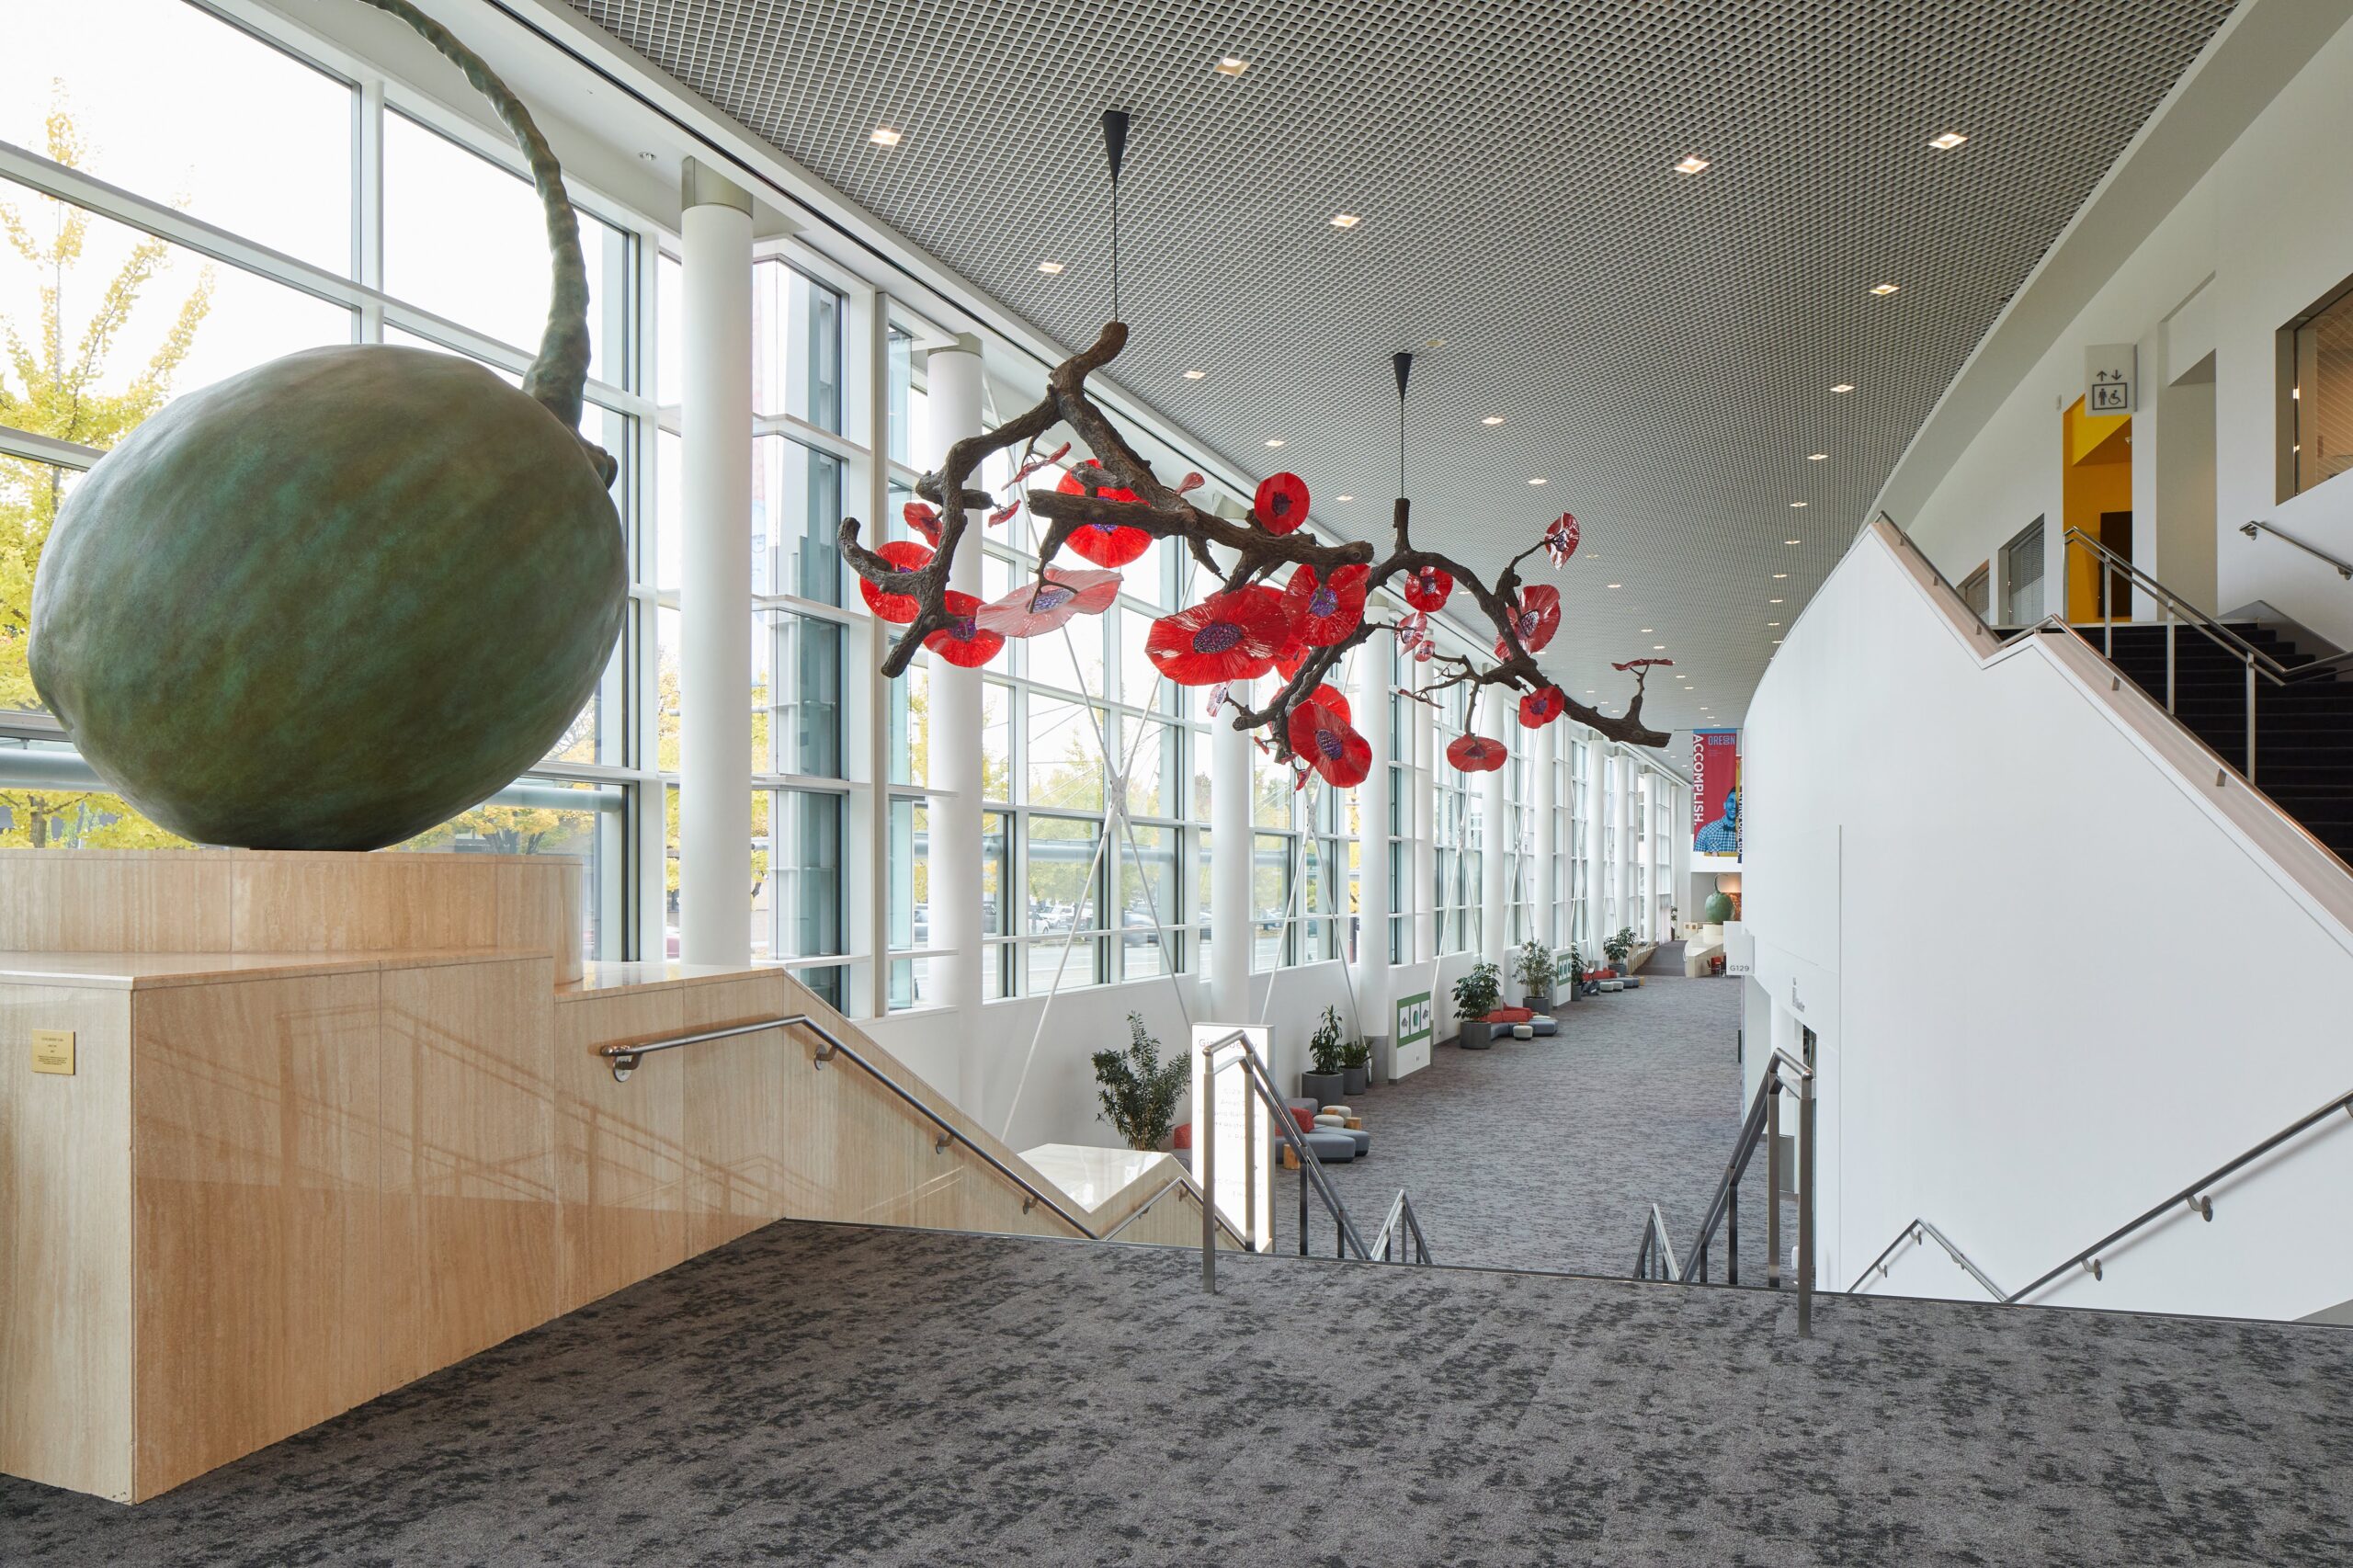 Ginko Berry sculpture at Oregon Convention Center in portland, oregon